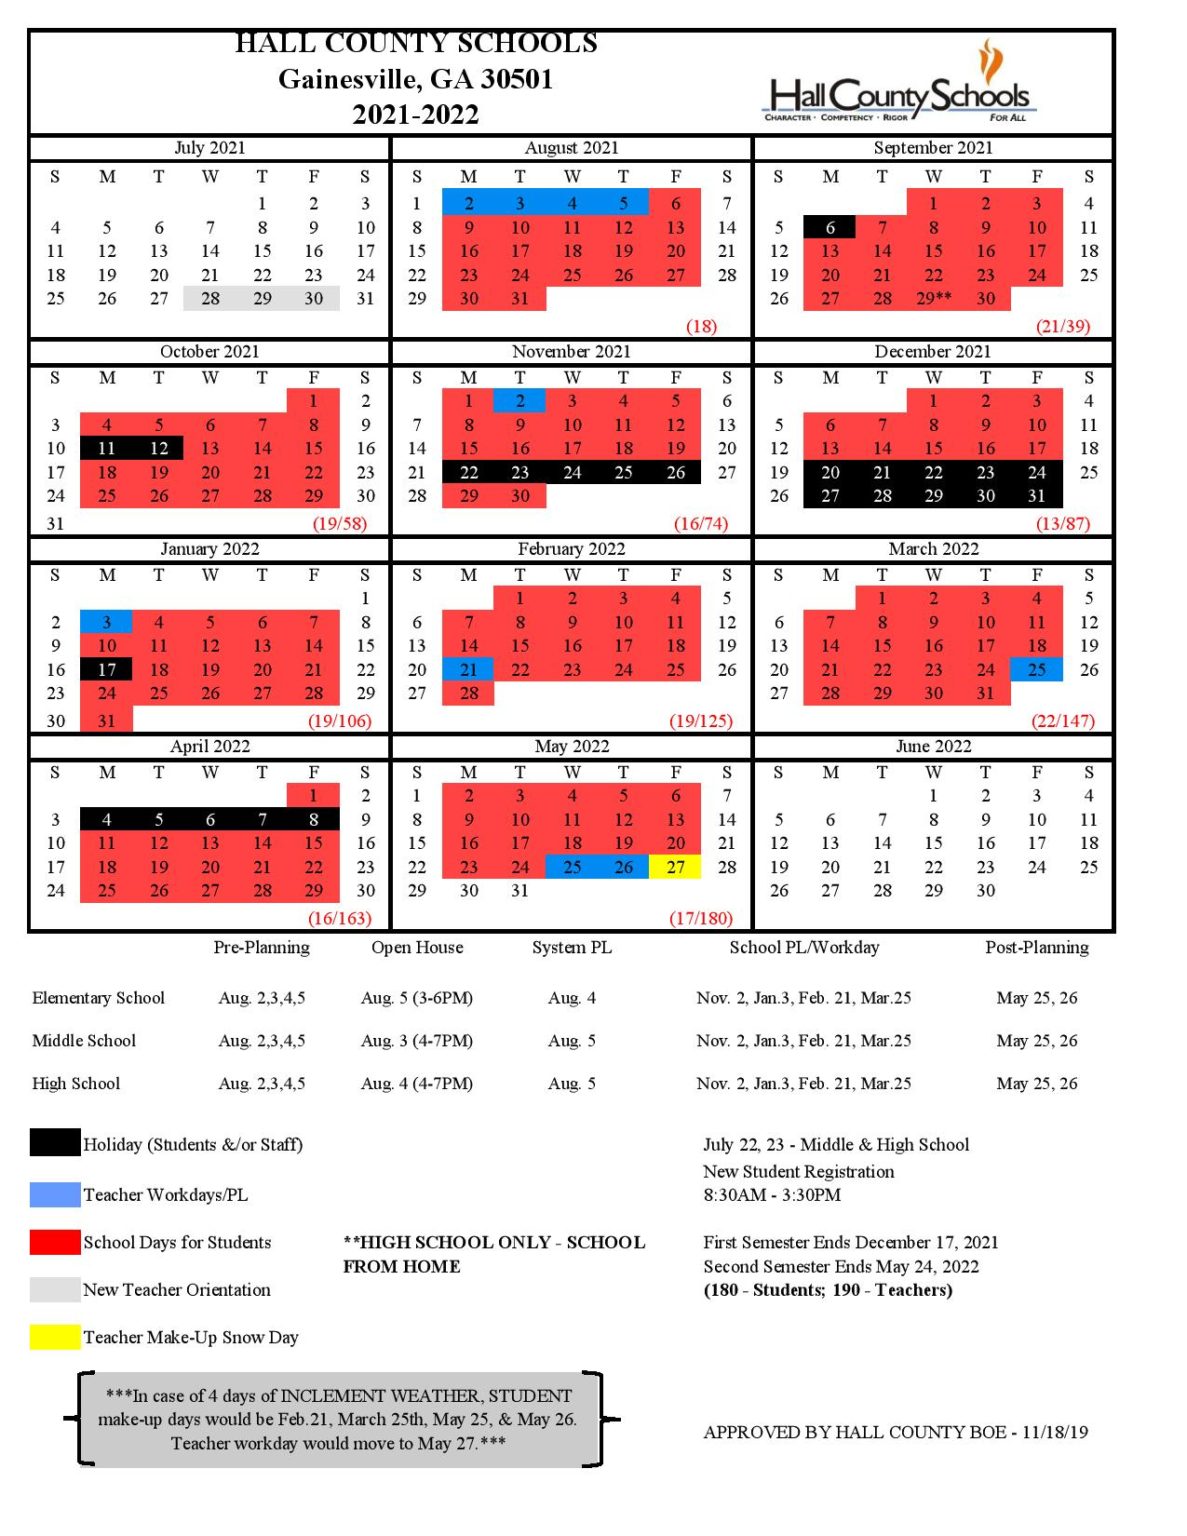 hall-county-schools-calendar-2021-2022-holidays